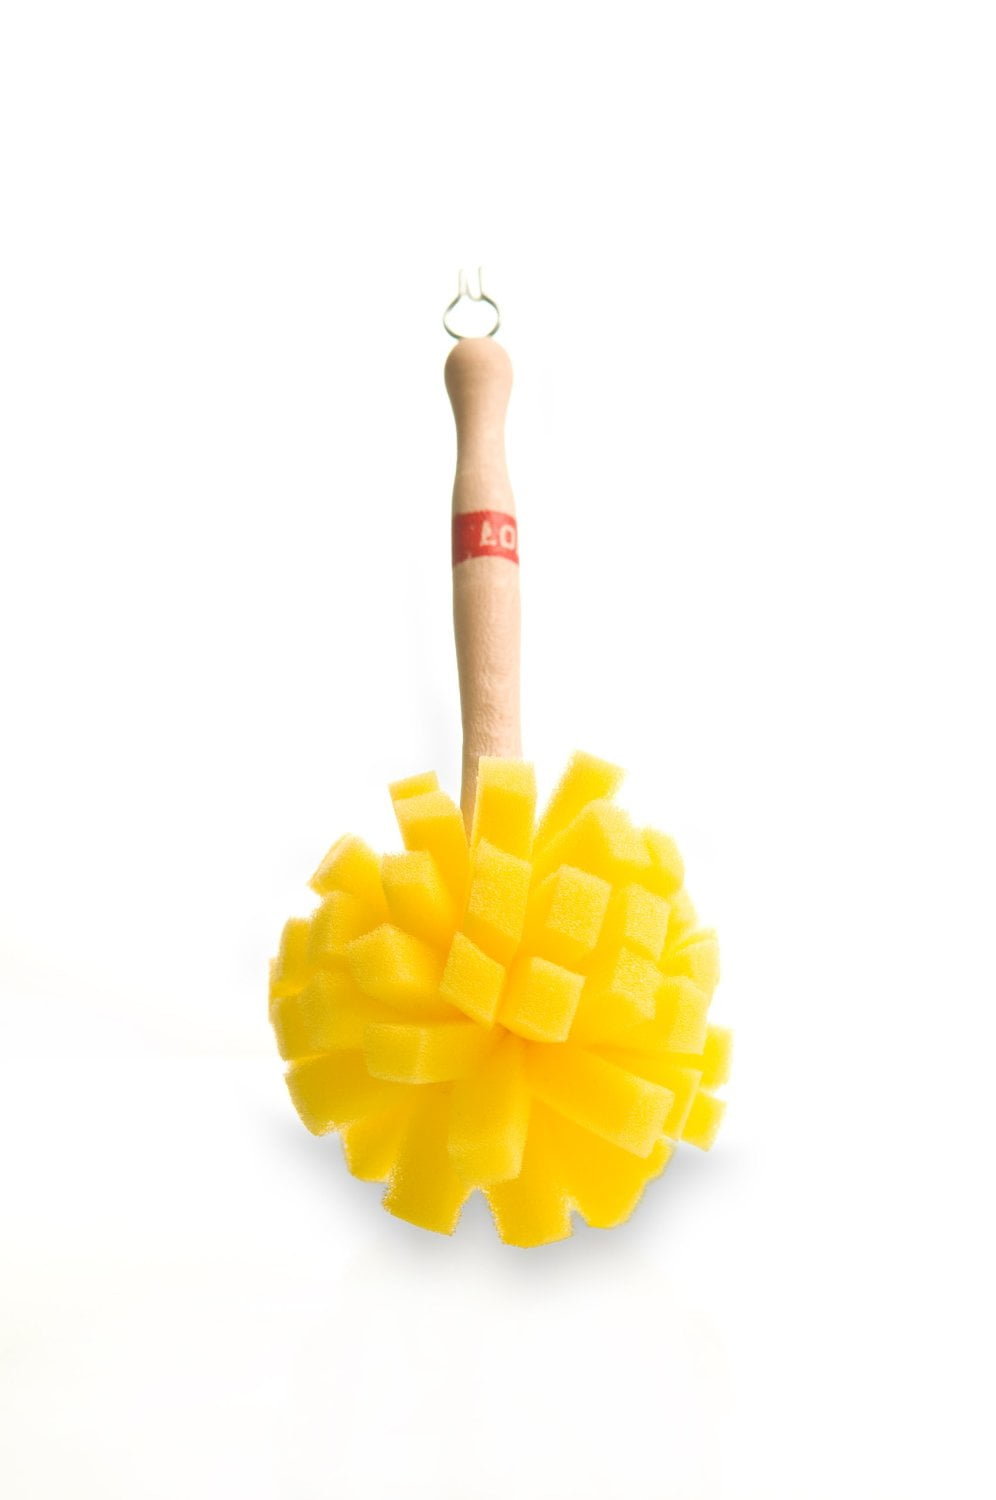 dish sponge on a stick